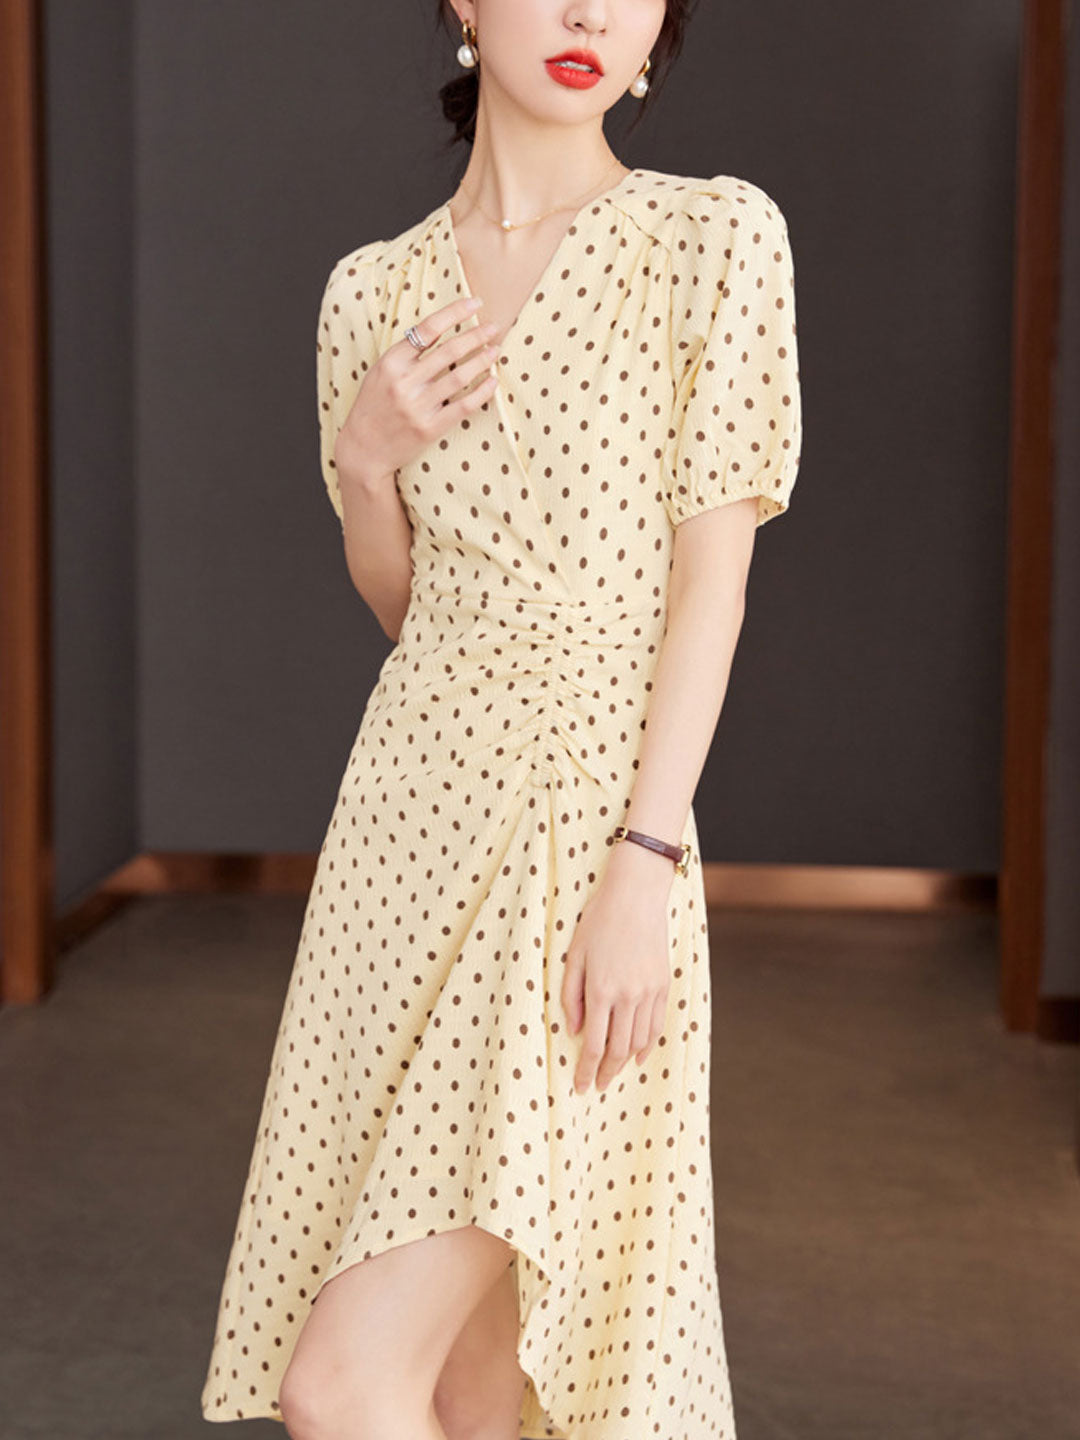 Chloe V-Neck Polka Dot Printed Irregular Dress